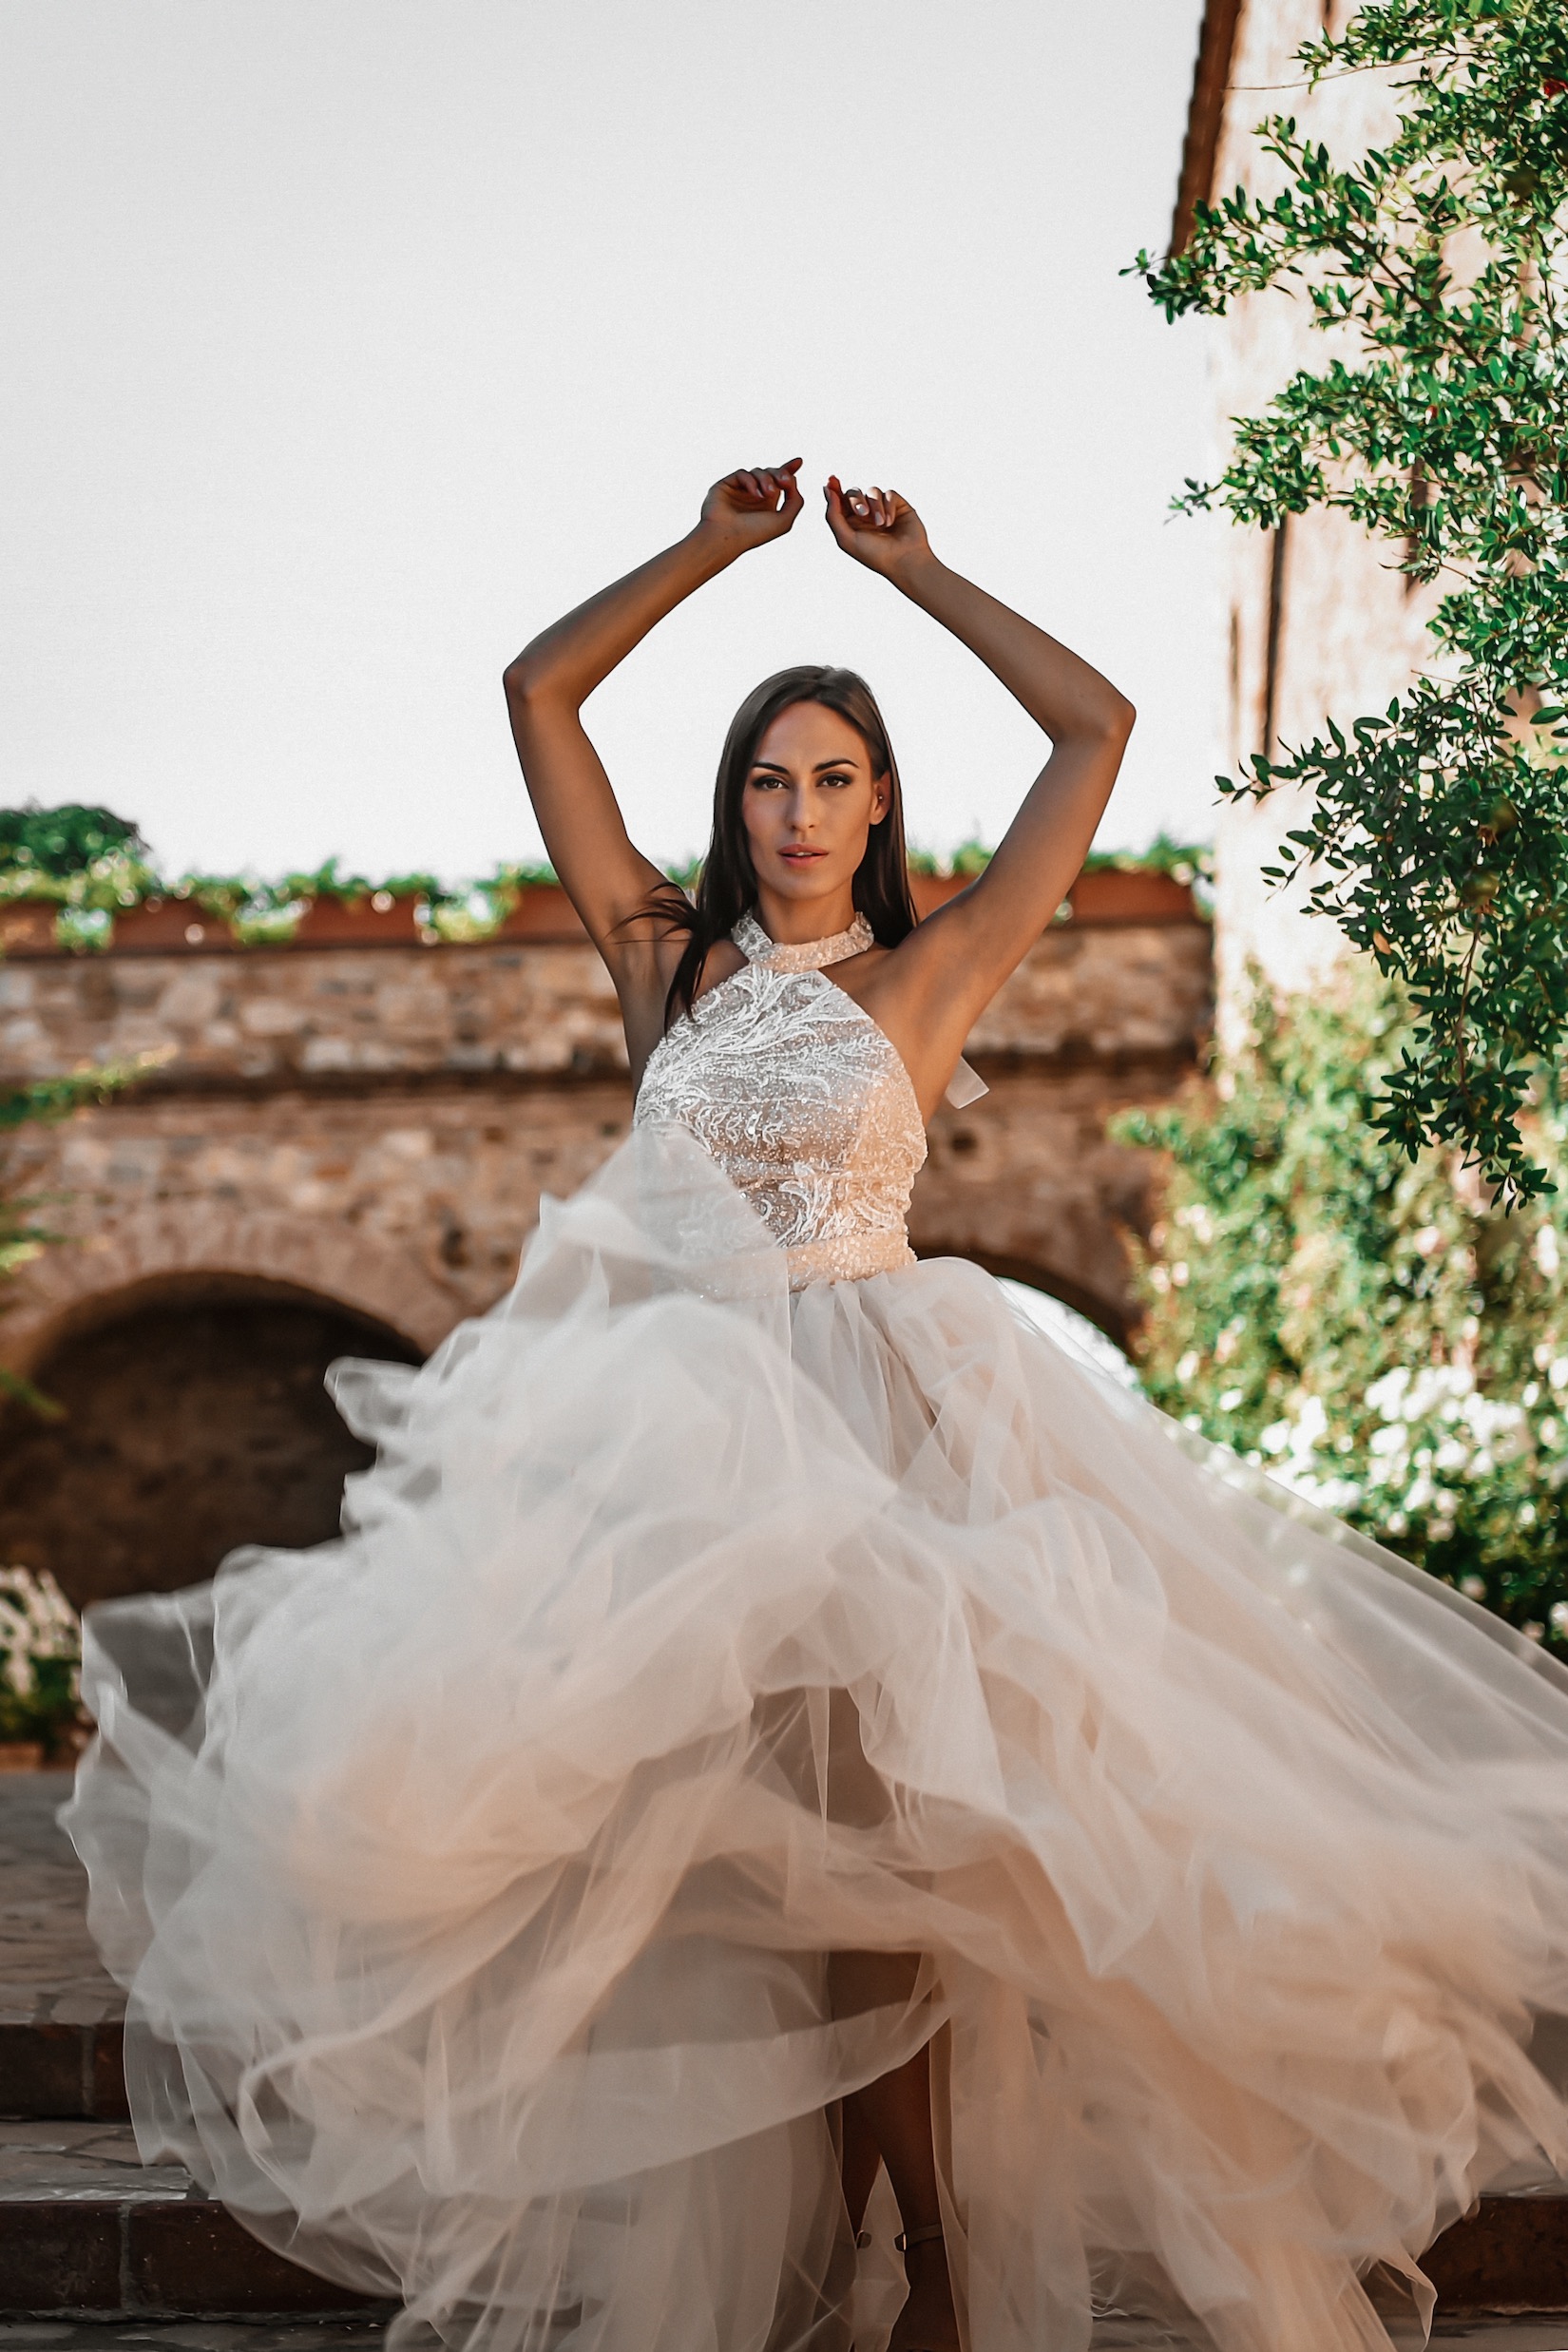 ORSOYA Bridal Dress: Halter neck bridal dress with tulle skirt.